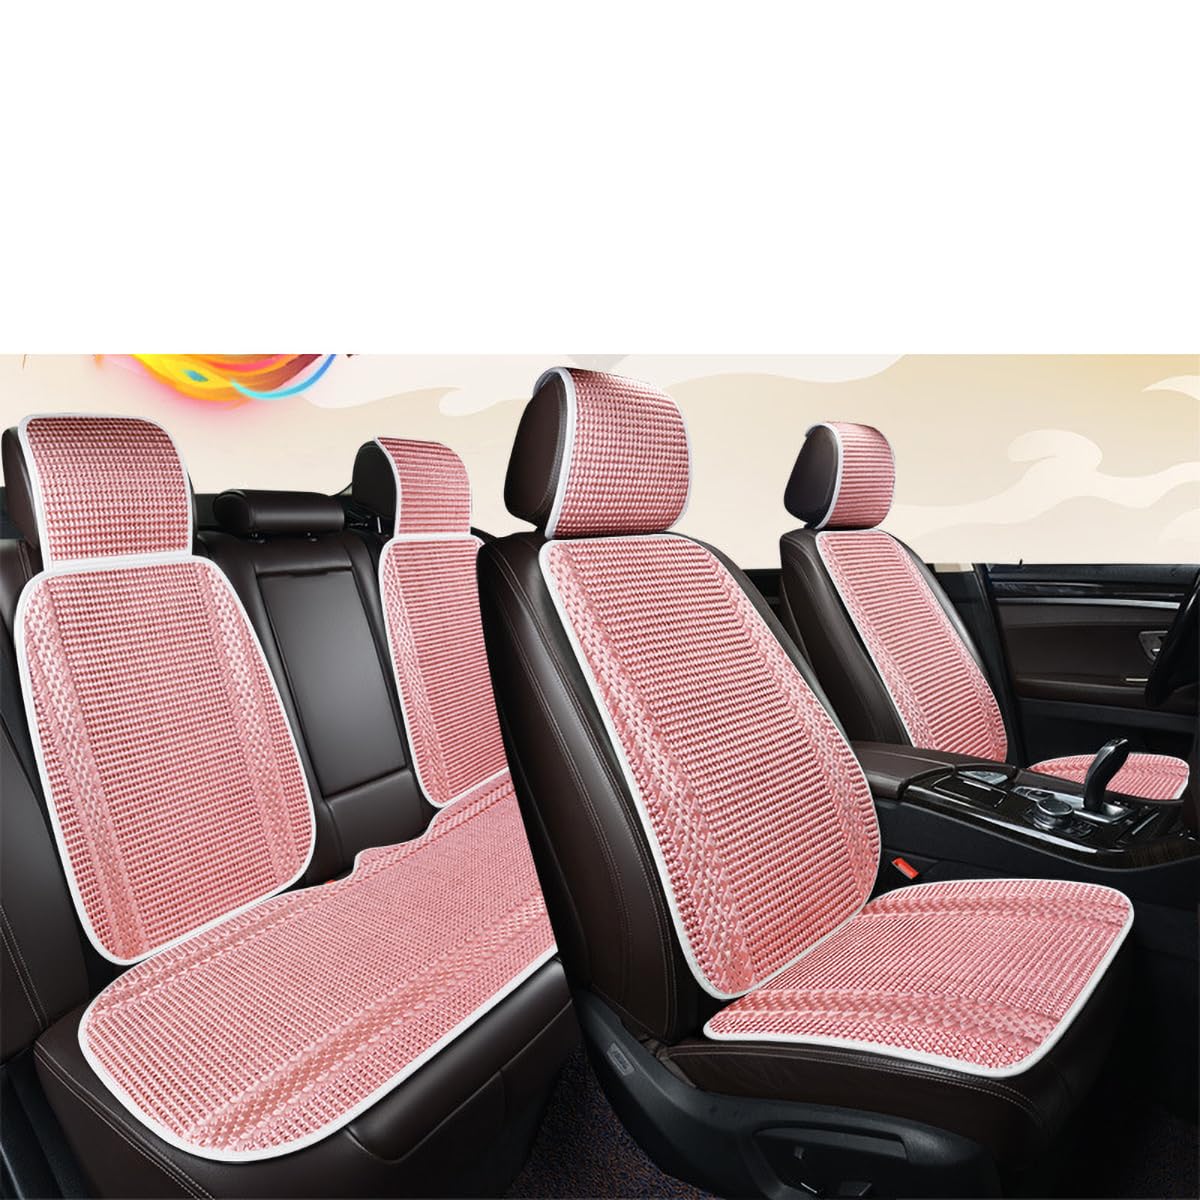 ASNAT Belüfteter Autositzbezug den Sommer für BMW 4er 435i, Atmungsaktiv Und Bequem, Anti Rutsch Autositzschoner, E-pink-7PCS von ASNAT